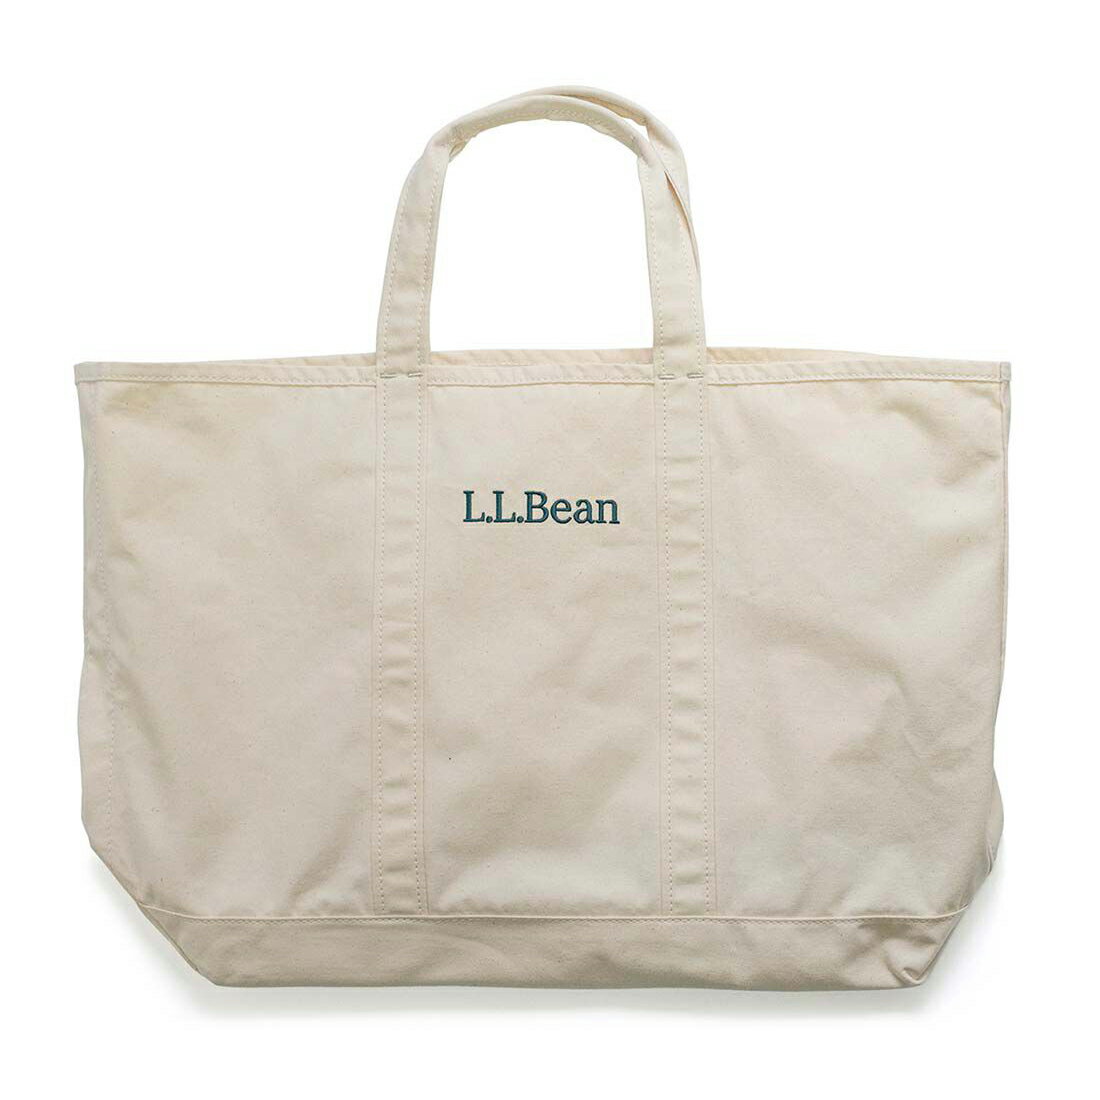 「L.L.Bean」のグローサリートートバッグは、荷物がたっぷり入る大容量だから、マザーズバッグや保育園バッグとしても人気。折りたためる薄手のキャンバス地で、豊富なカラーバリエーションも魅力的です。